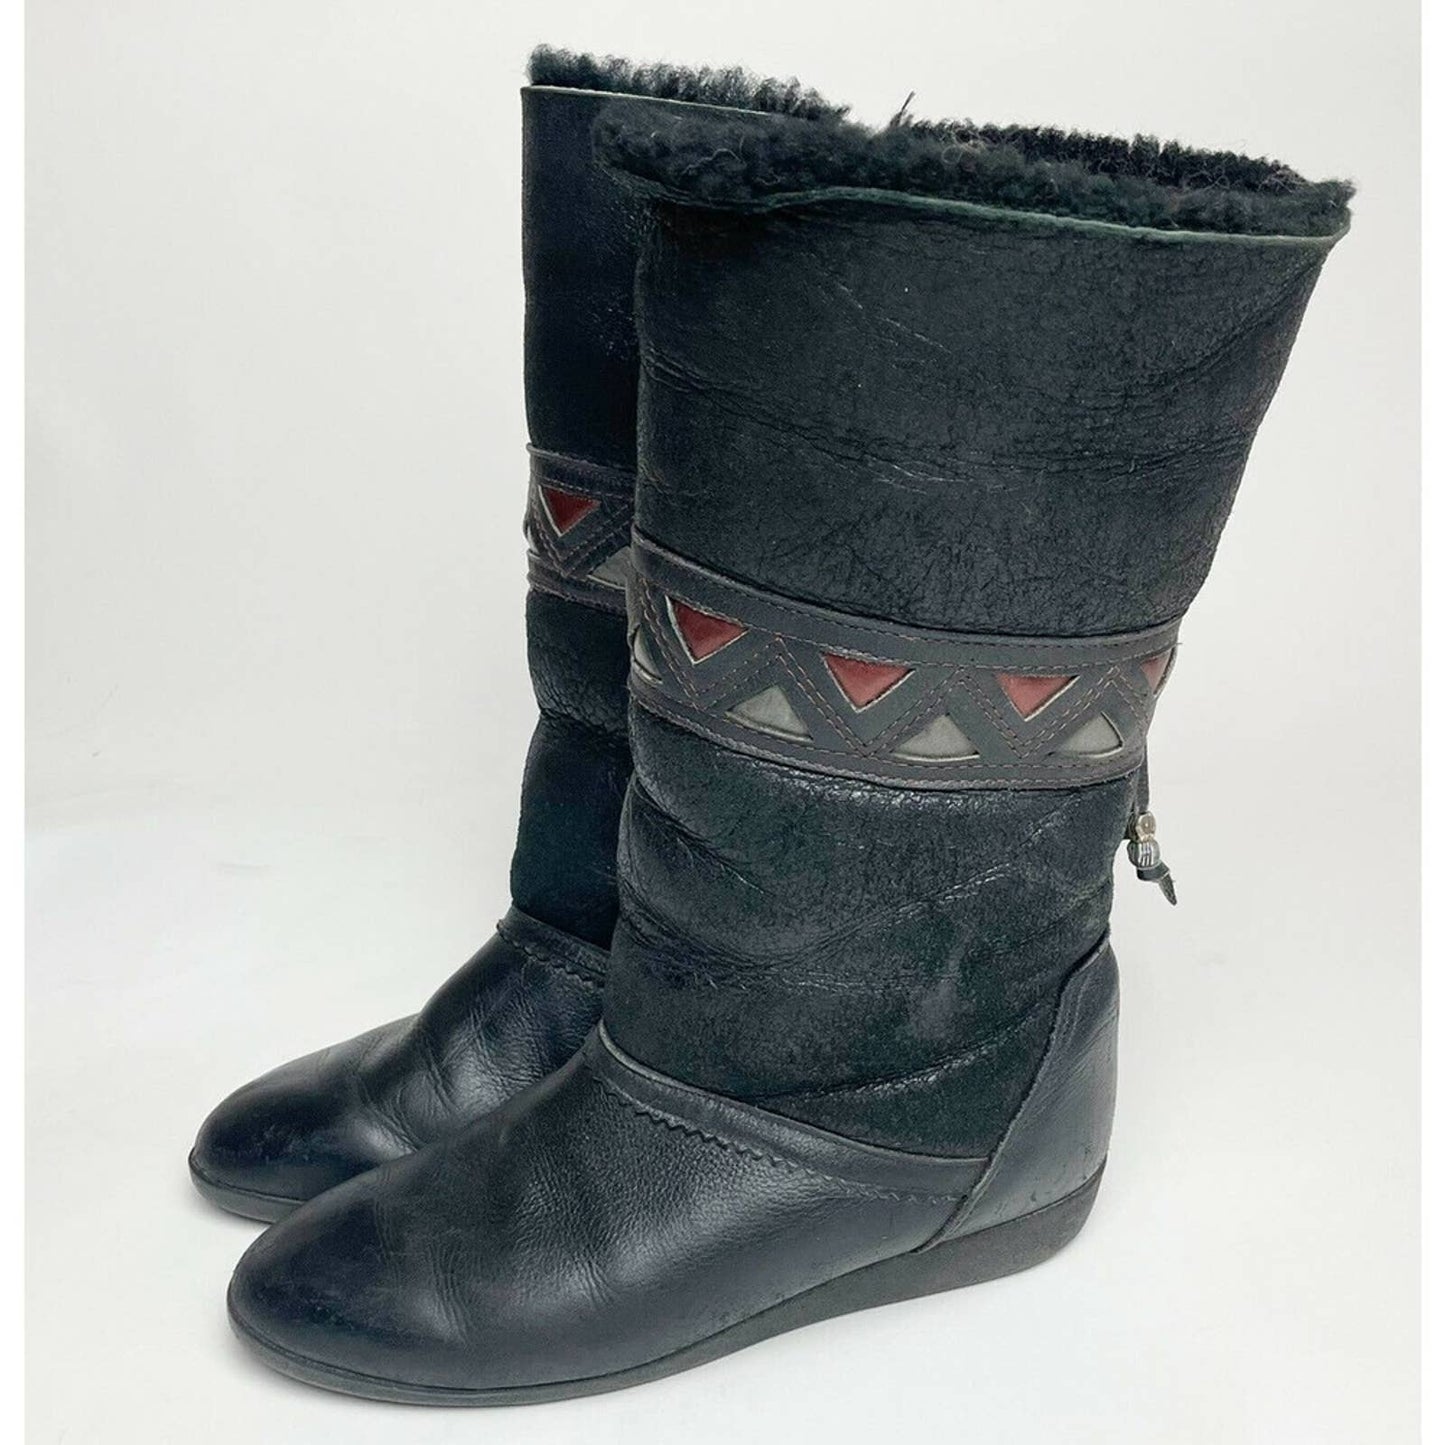 Vintage Sorel Sheepskin Boots Black 1980s Geometric Contrast Triangle 8.5